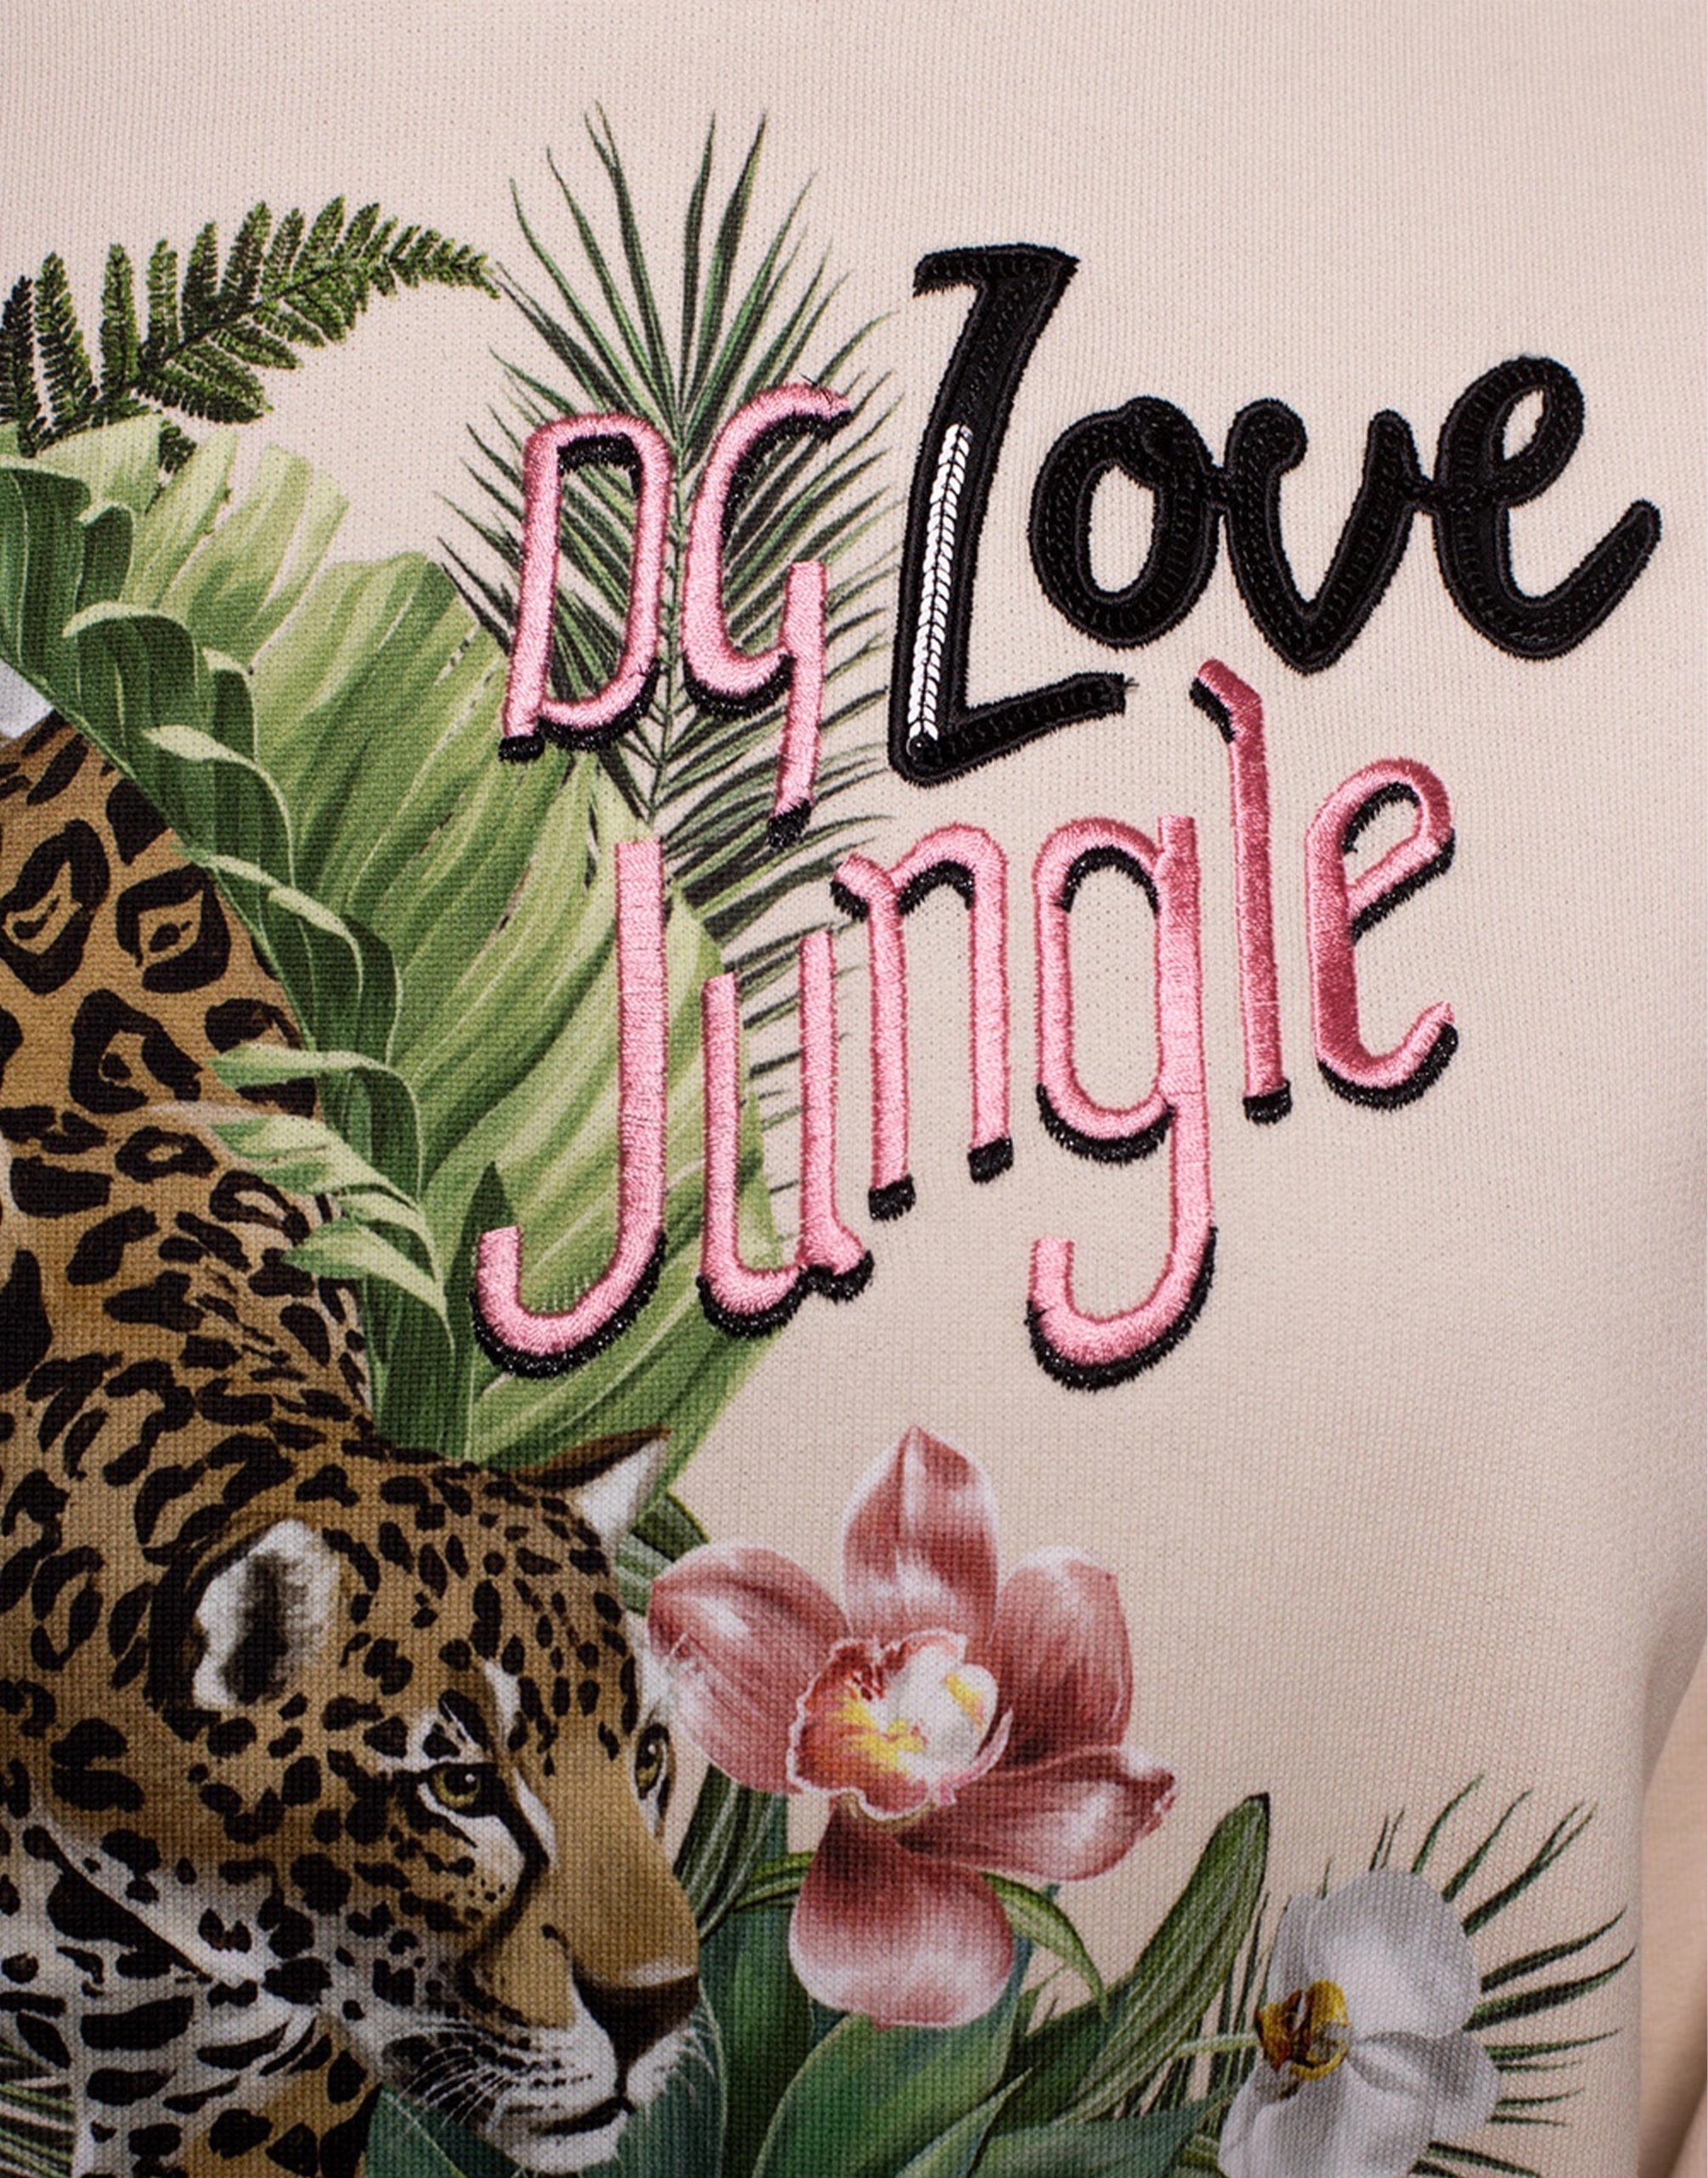 Dolce & Gabbana Cotton Sweater With Jungle Print